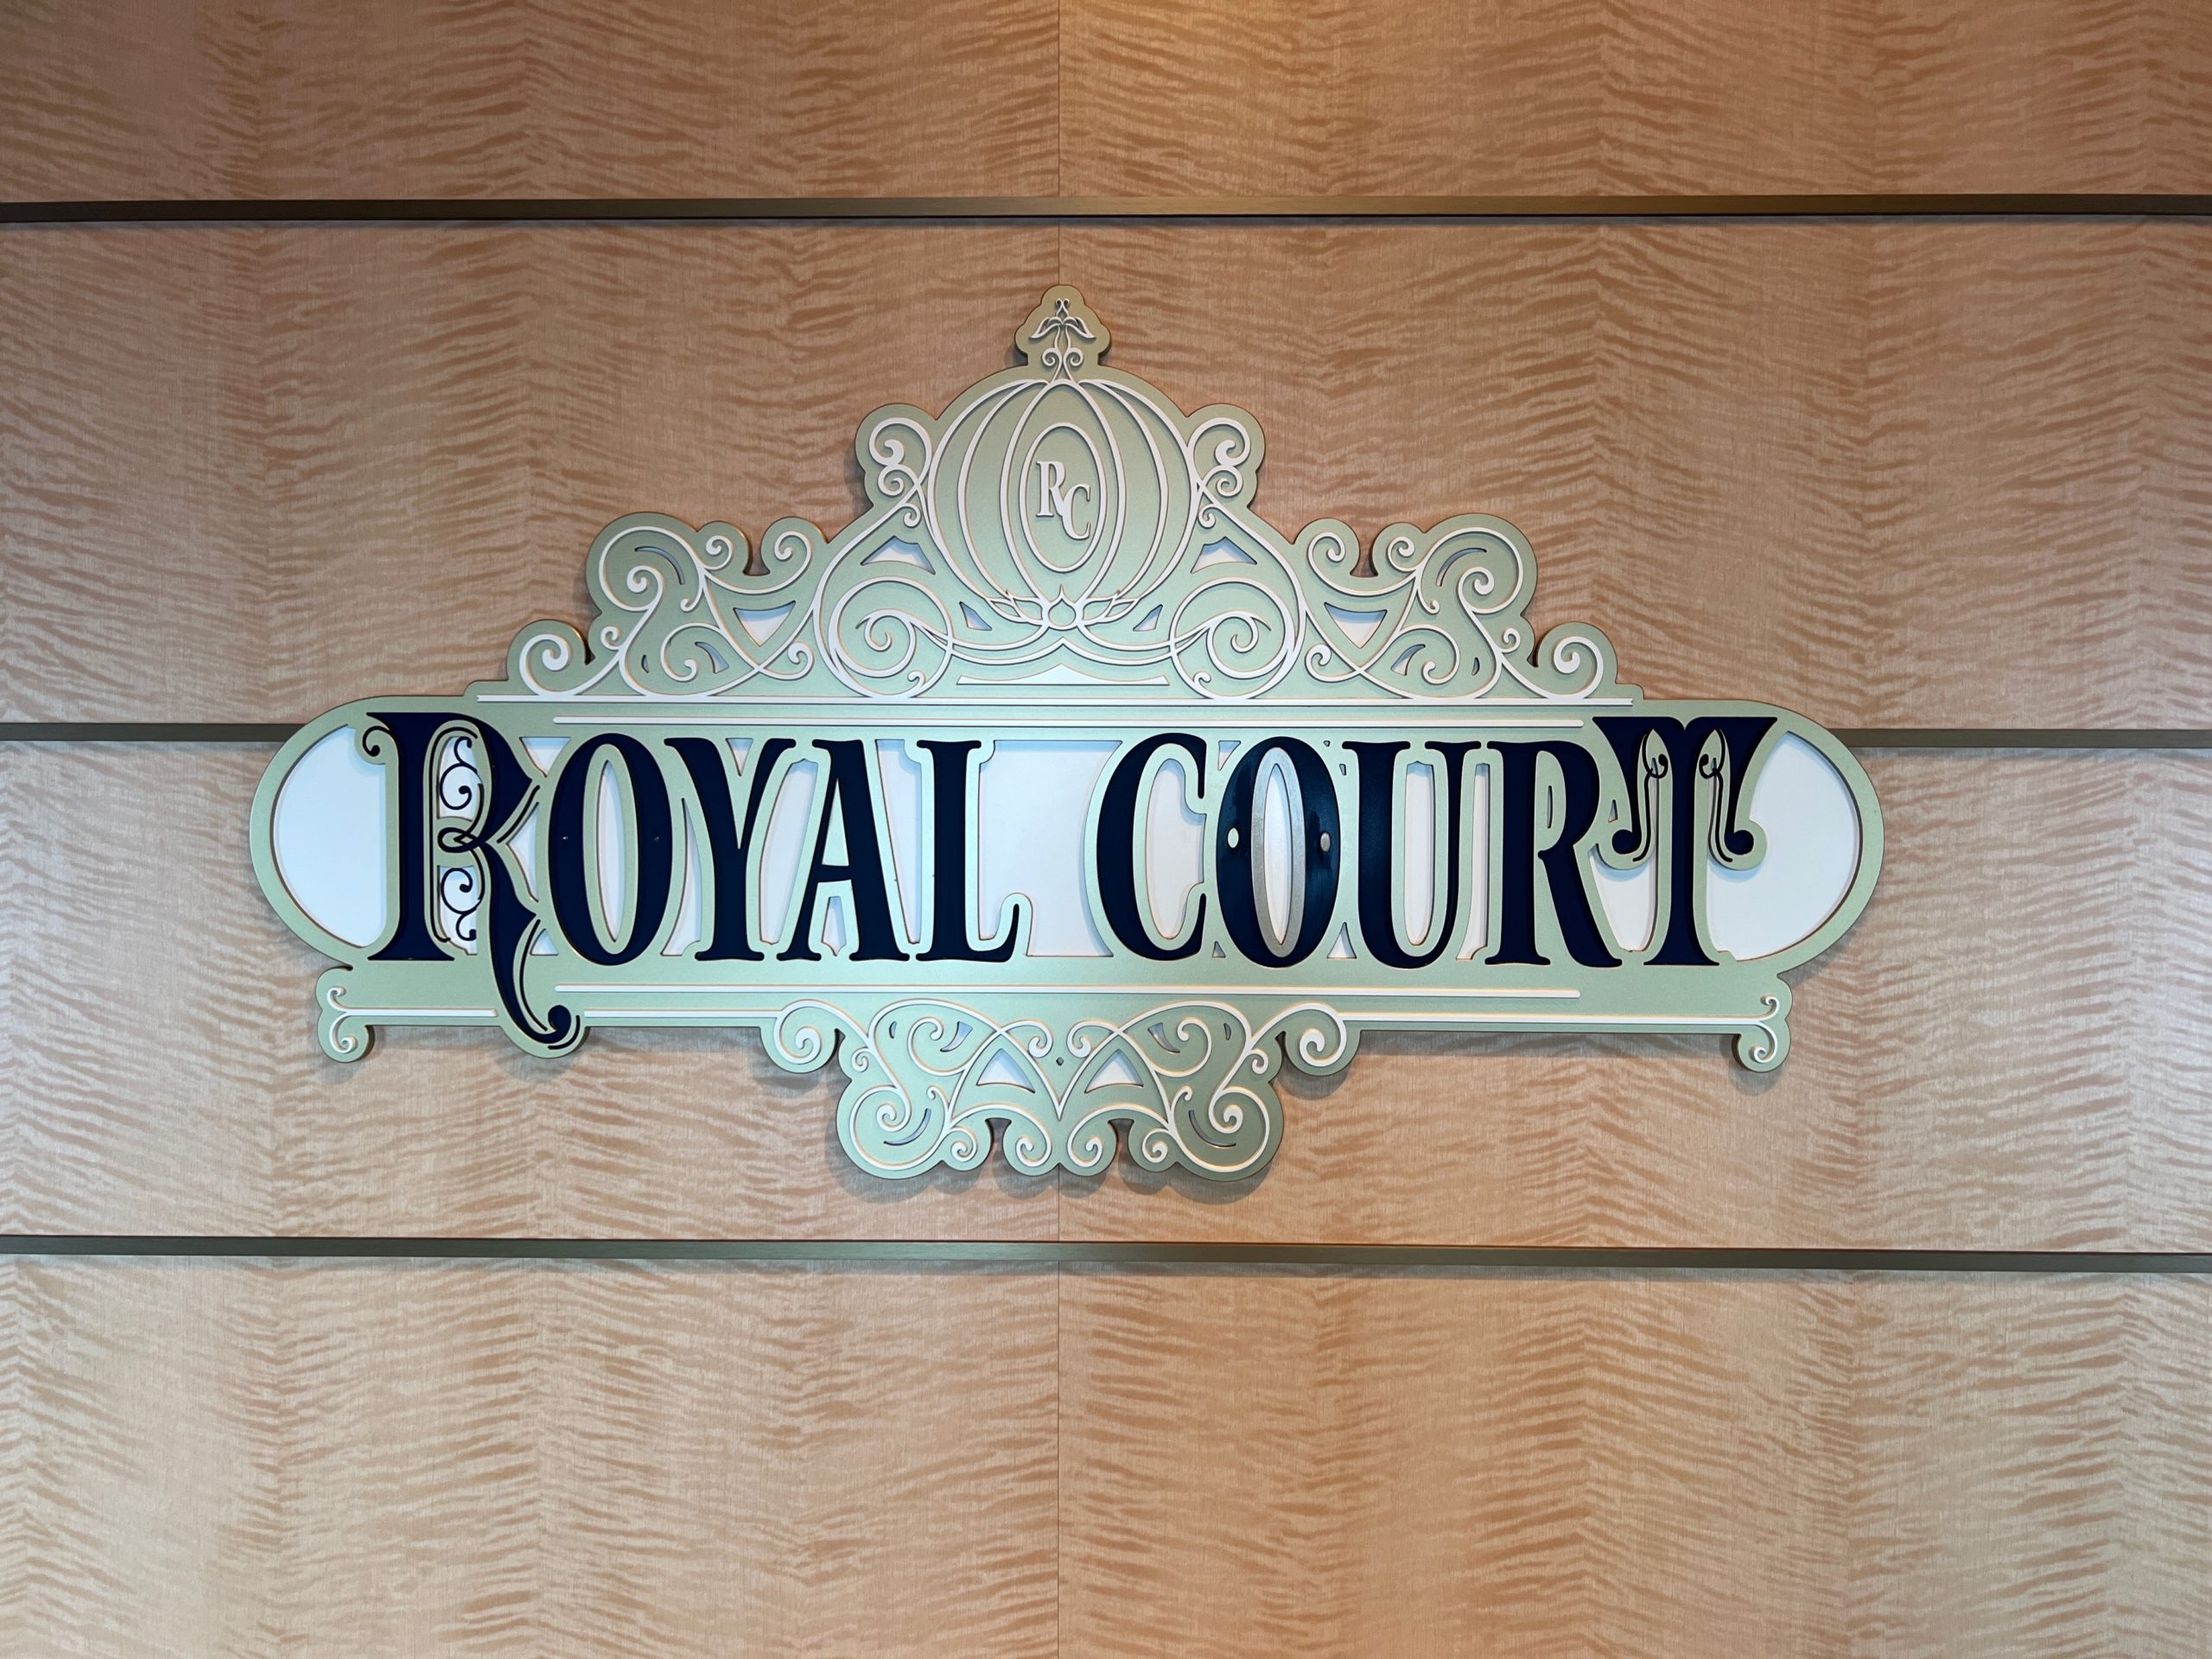 Royal Court Disney Fantasy